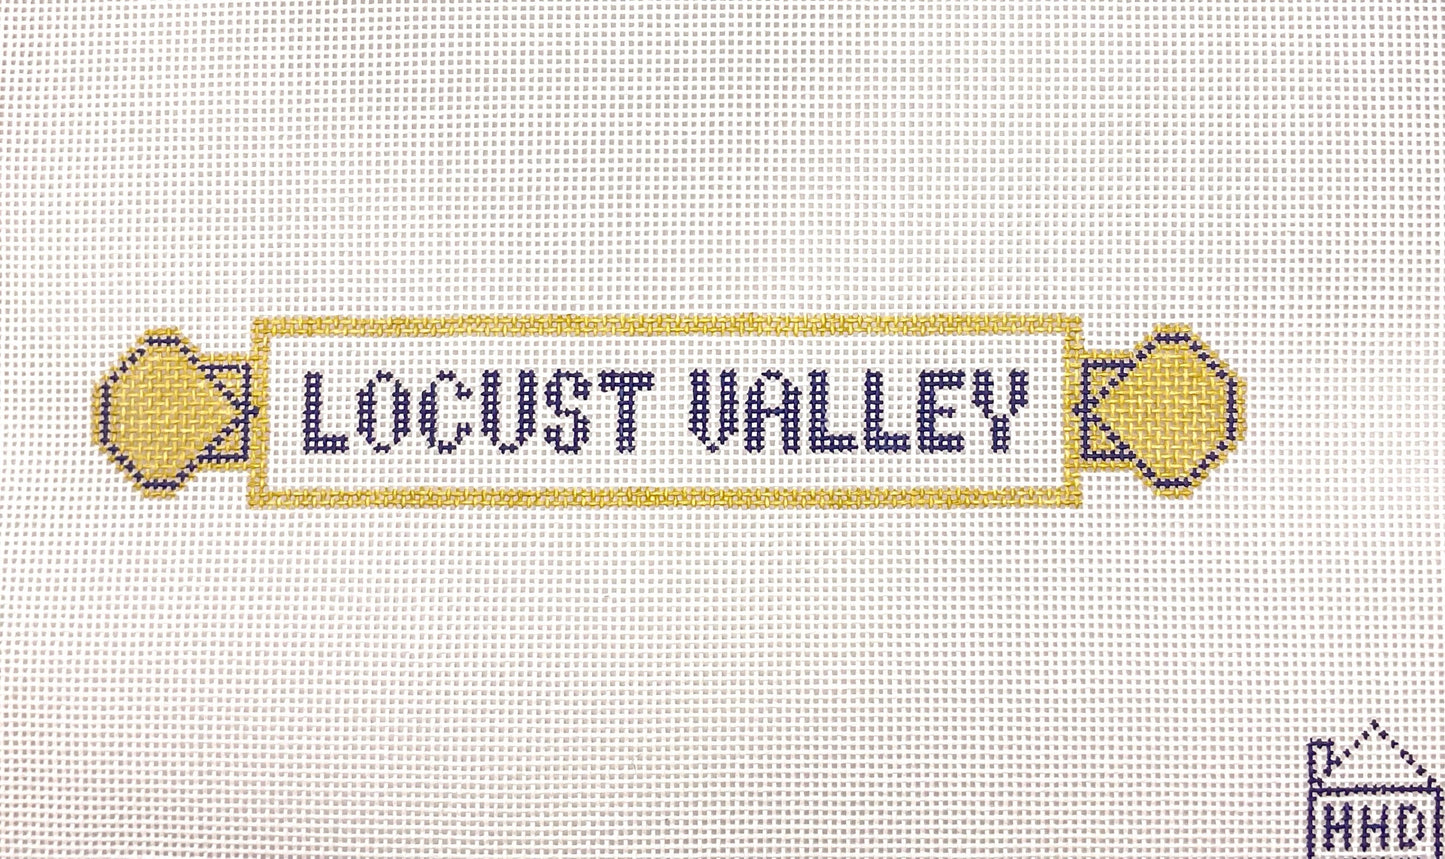 Locust Valley quarter board